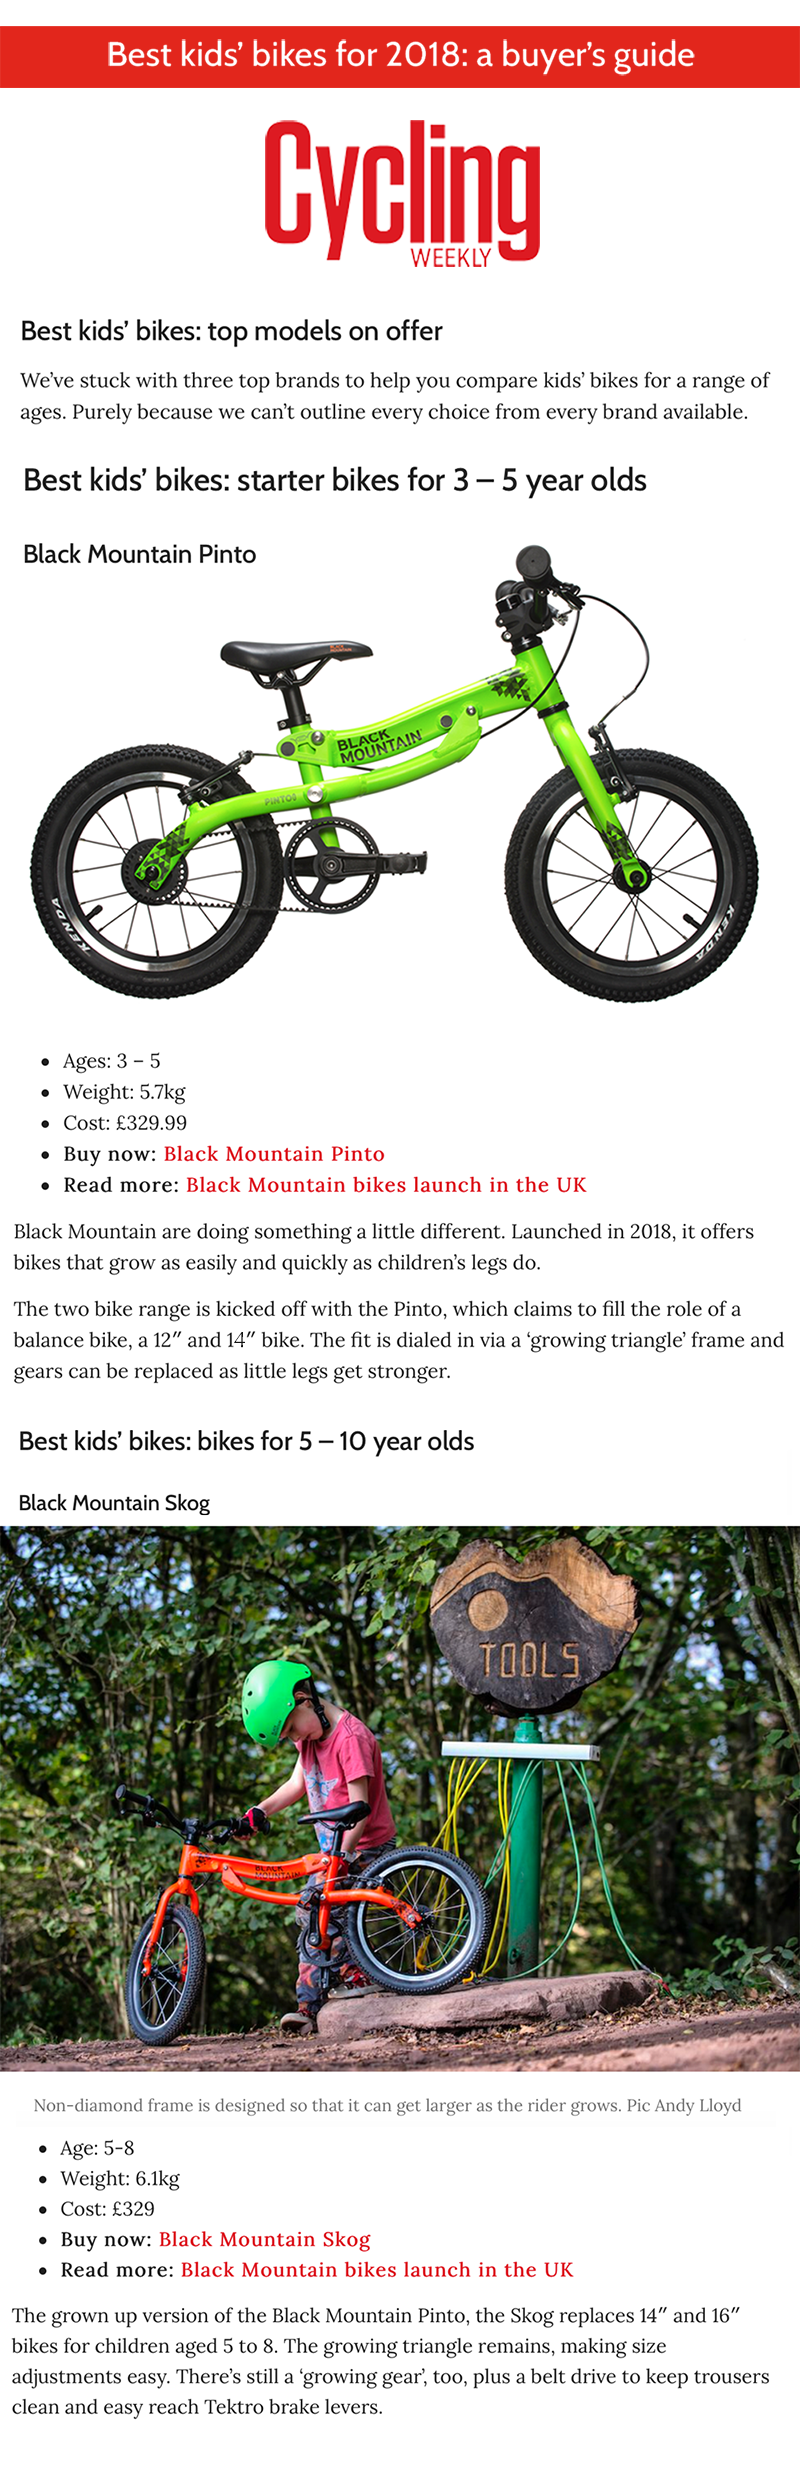 Cycling Weekly Best Kids' Bikes 2018 Black Mountain